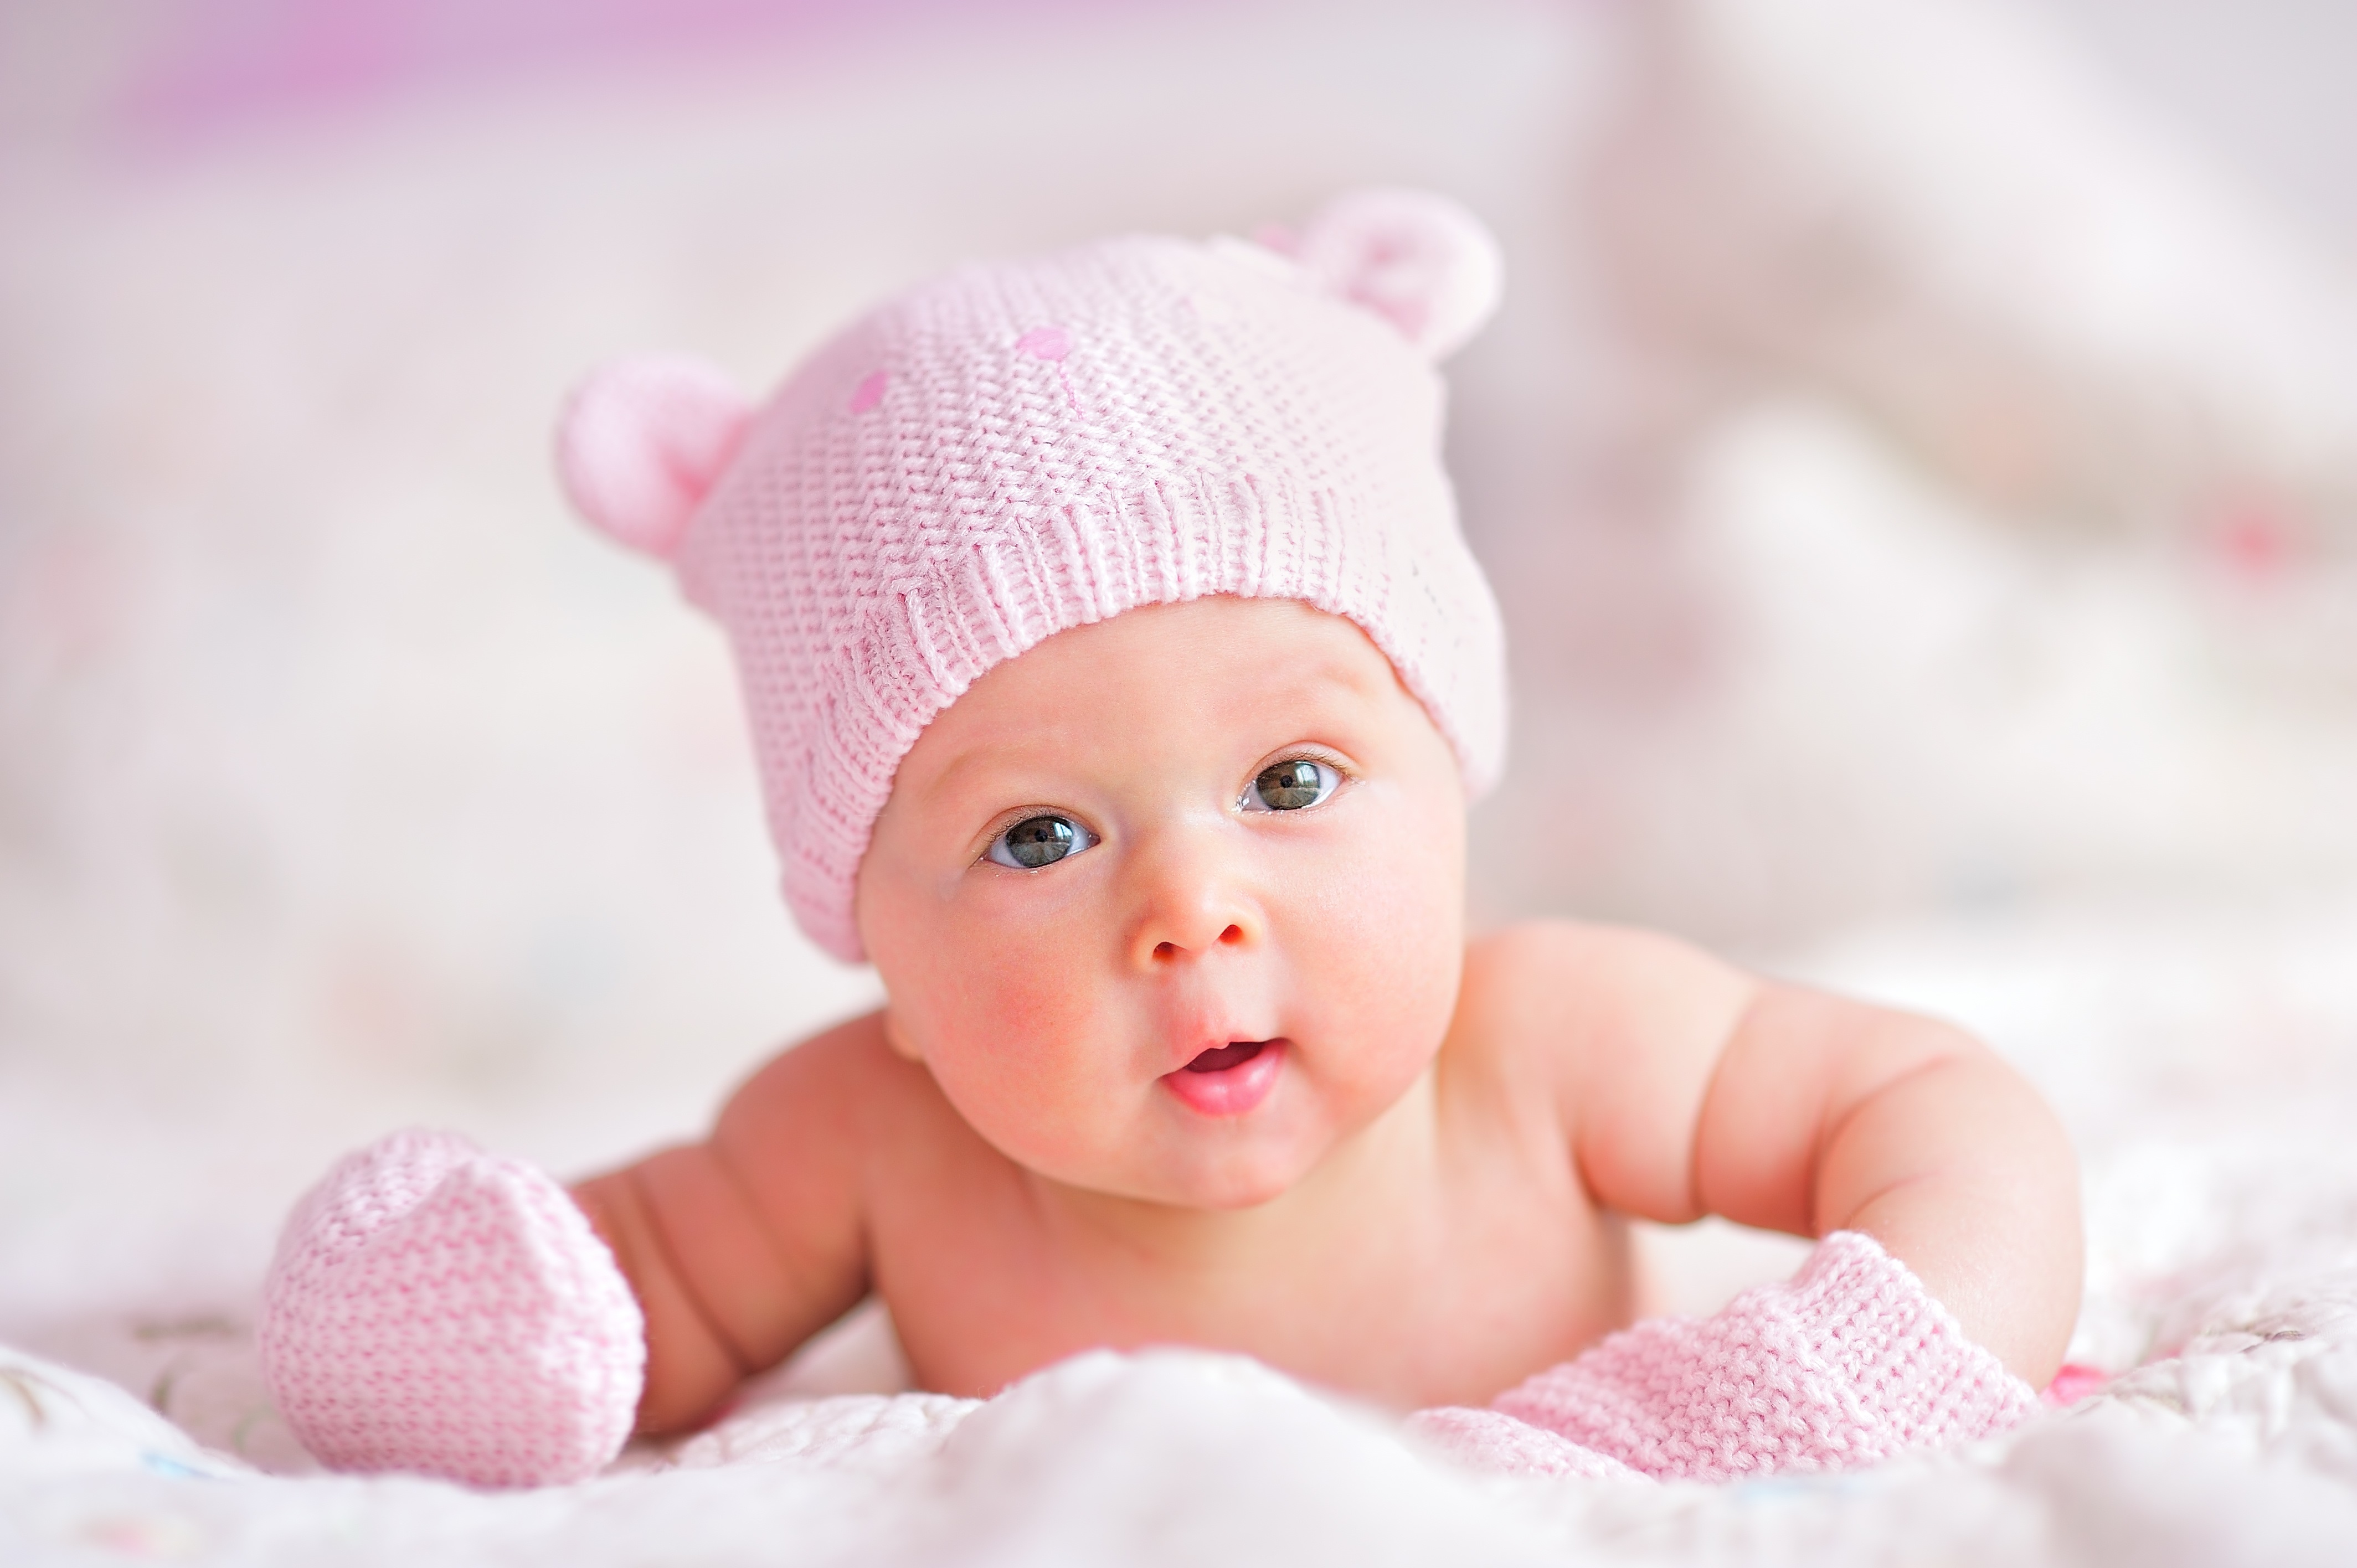 Personalized Gift Ideas For A Newborn Baby | OrnamentShop.com